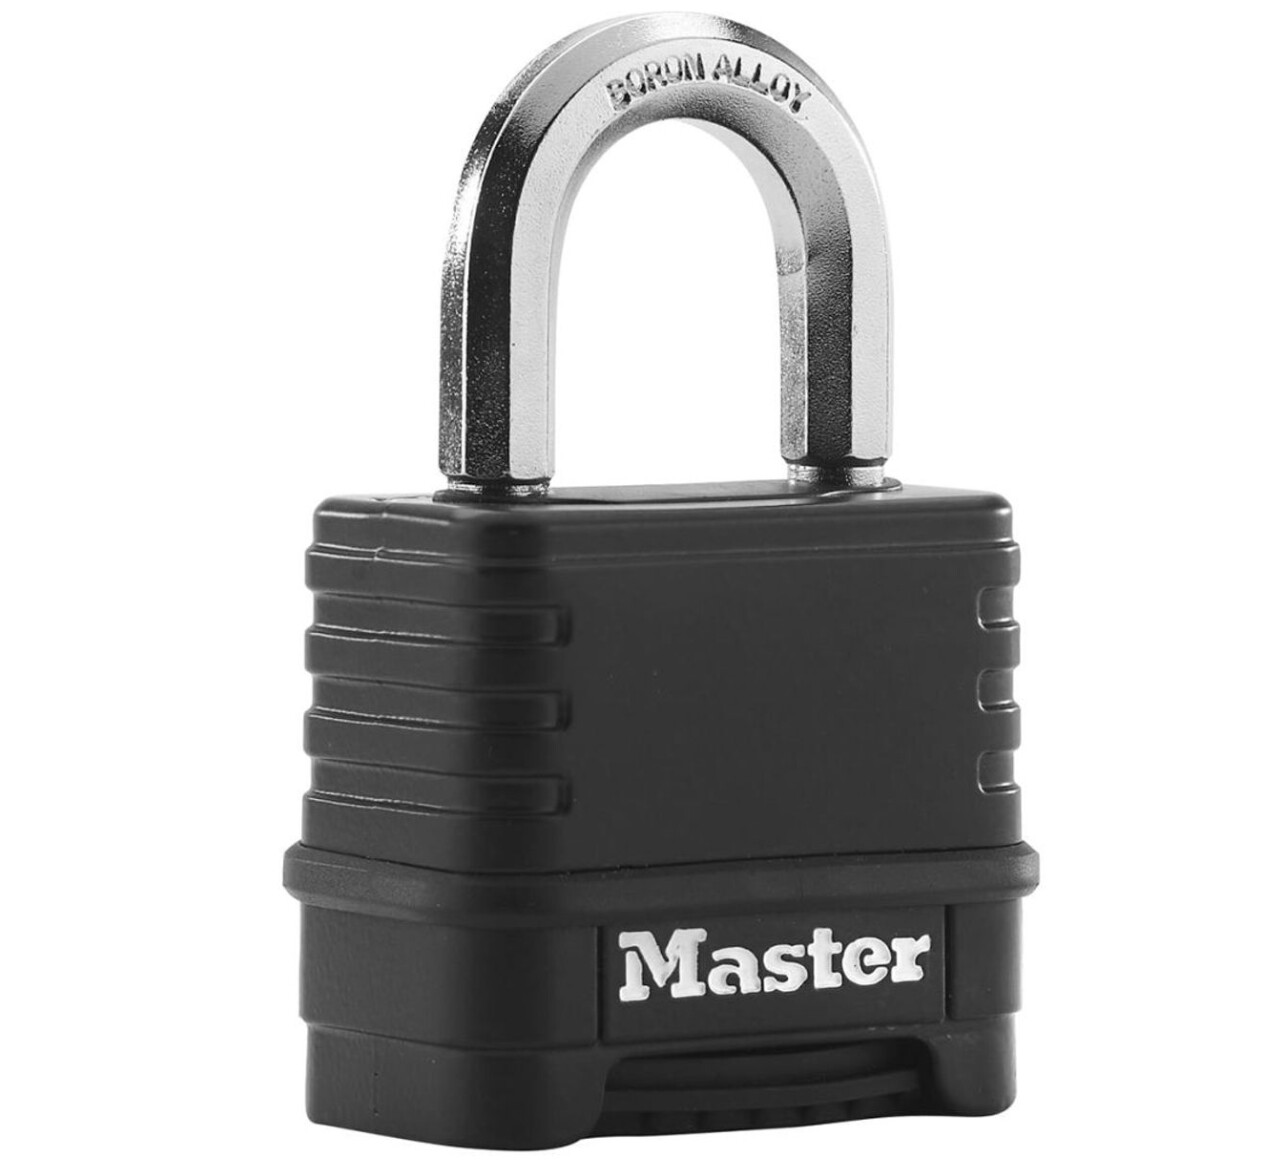 MASTER LOCK EXCELL M178D CADENAS PADLOCK CODE PASSWORD 3520190942548
SECURITY DOOR WAREHOUSE GARDEN PARKING BOX SHOP STORE COMASOUND KARTEL